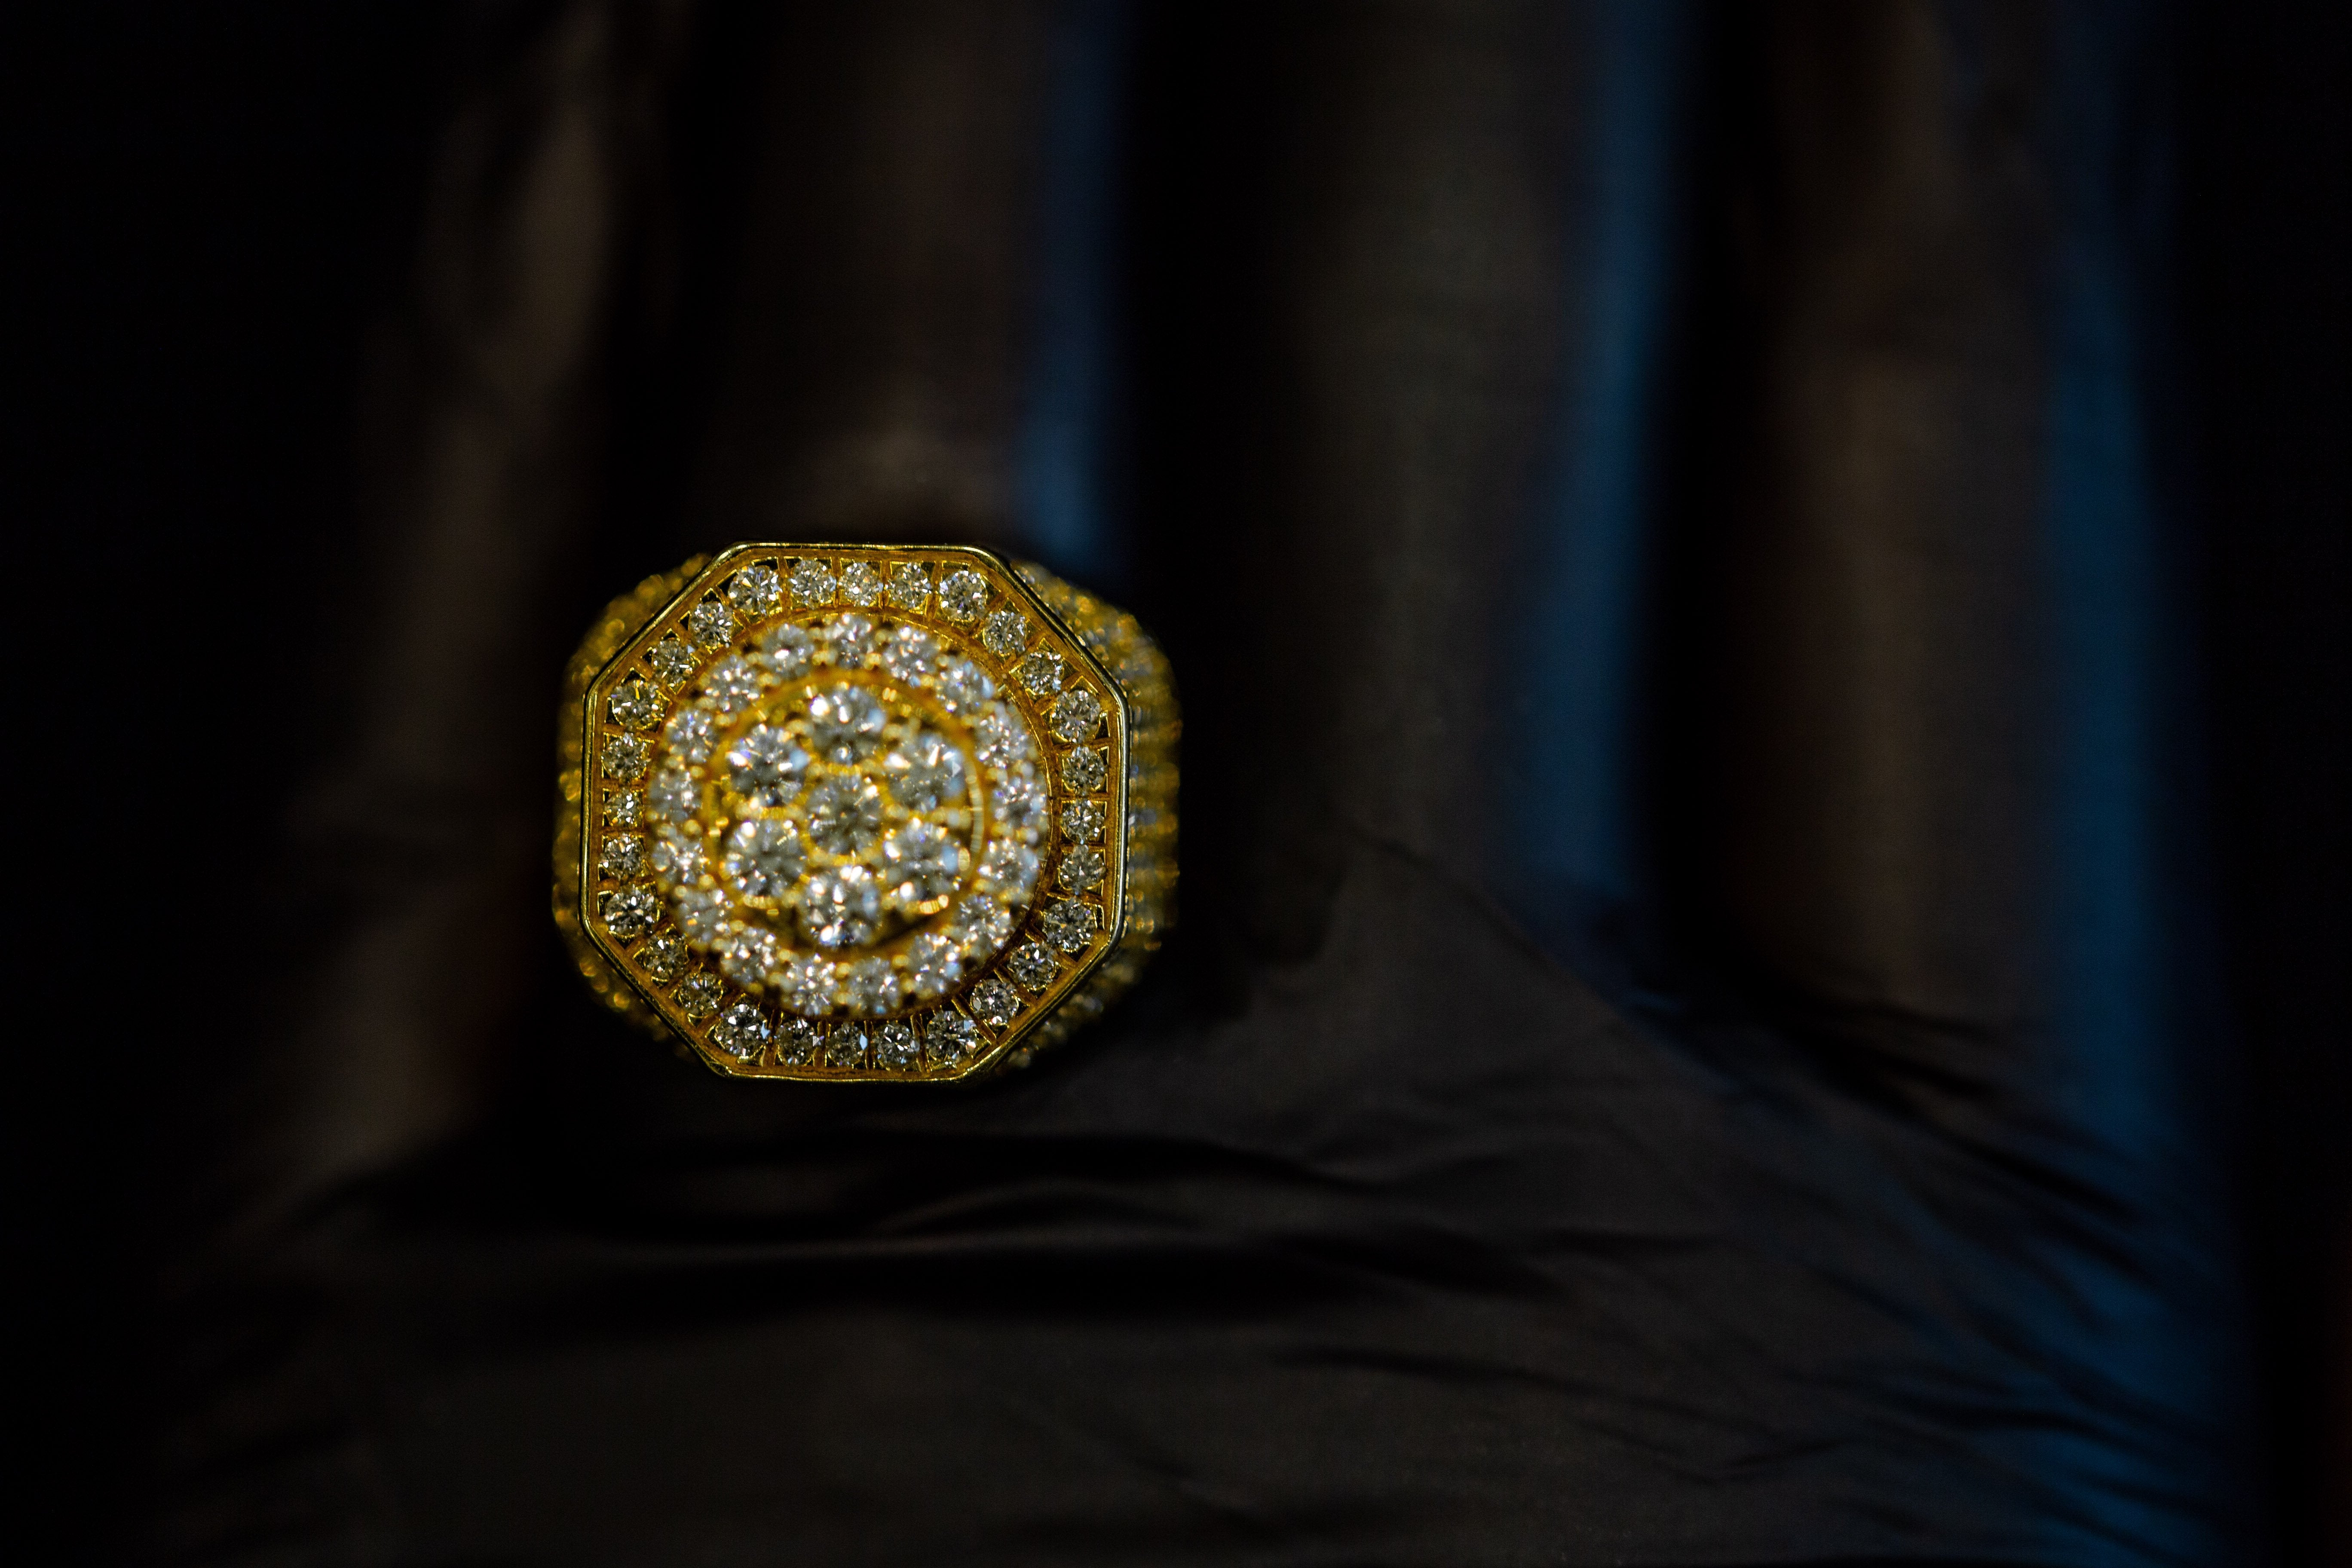 5.27 CT. Diamond Ring 10KT Gold - White Carat Diamonds 